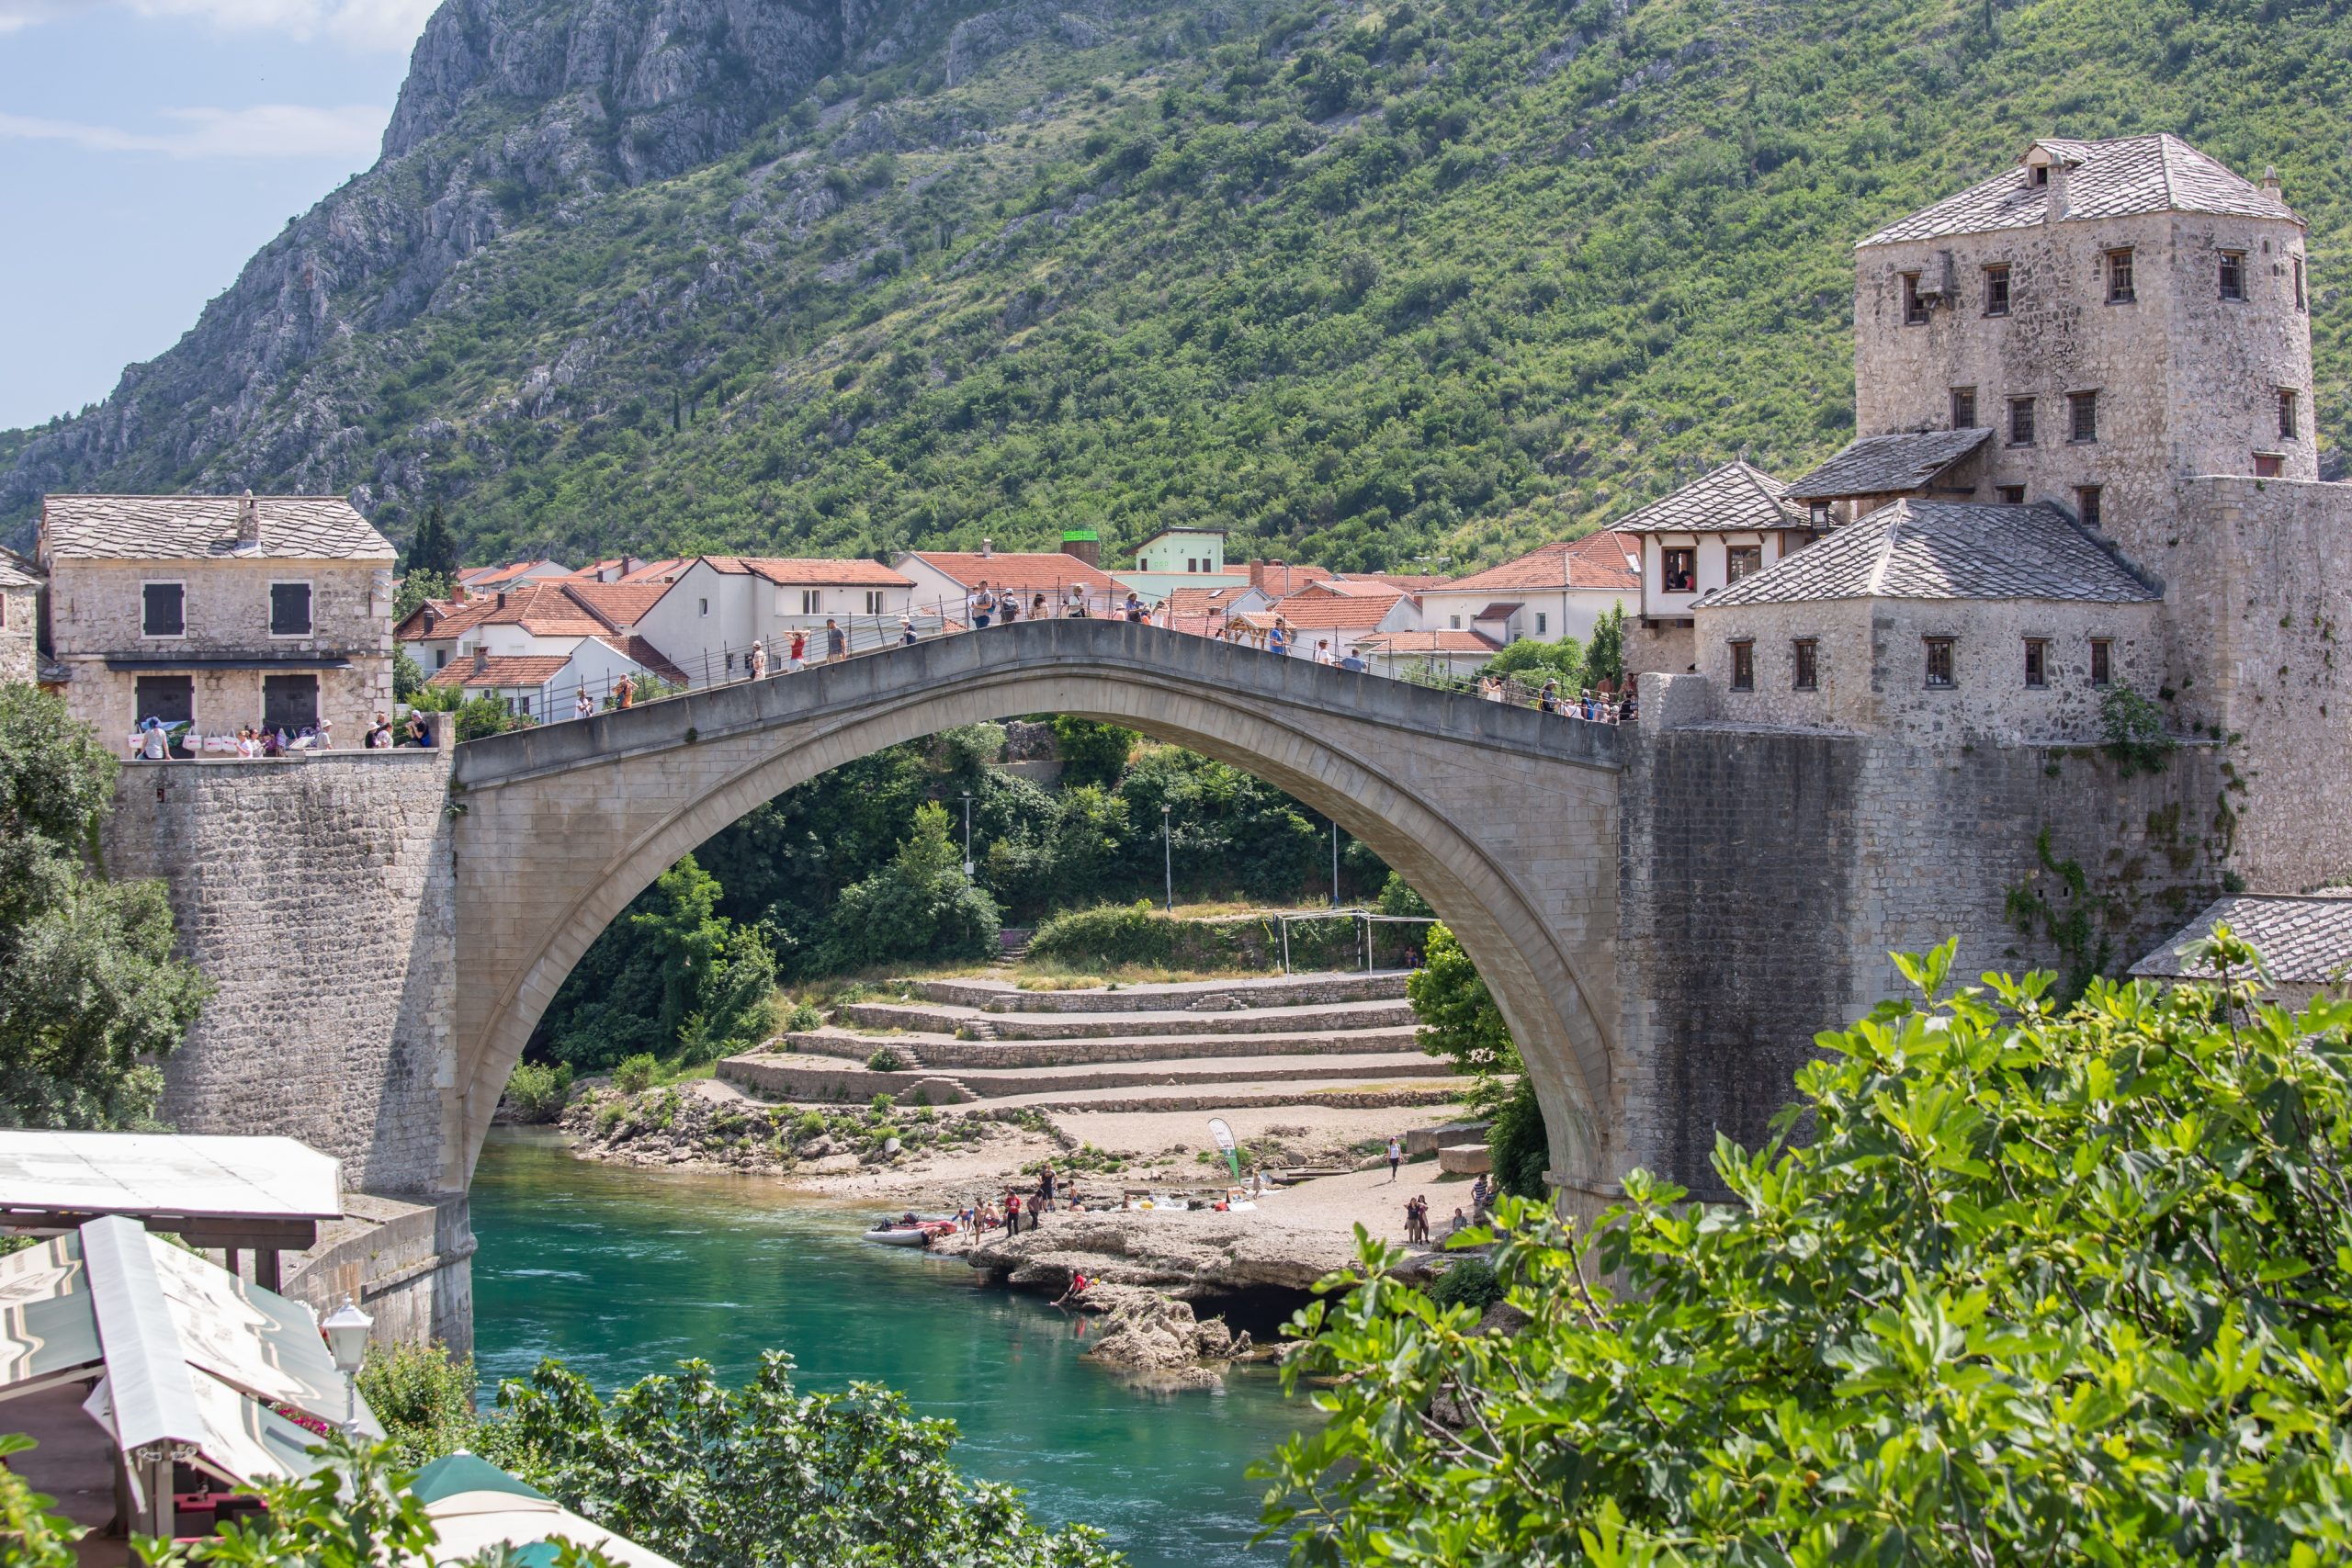 11.06.2018., Mostar, Bosna i Hercegovina - Ljeto u Mostaru. Grad pun turista. Stari most
Photo: Grgo Jelavic/PIXSELL